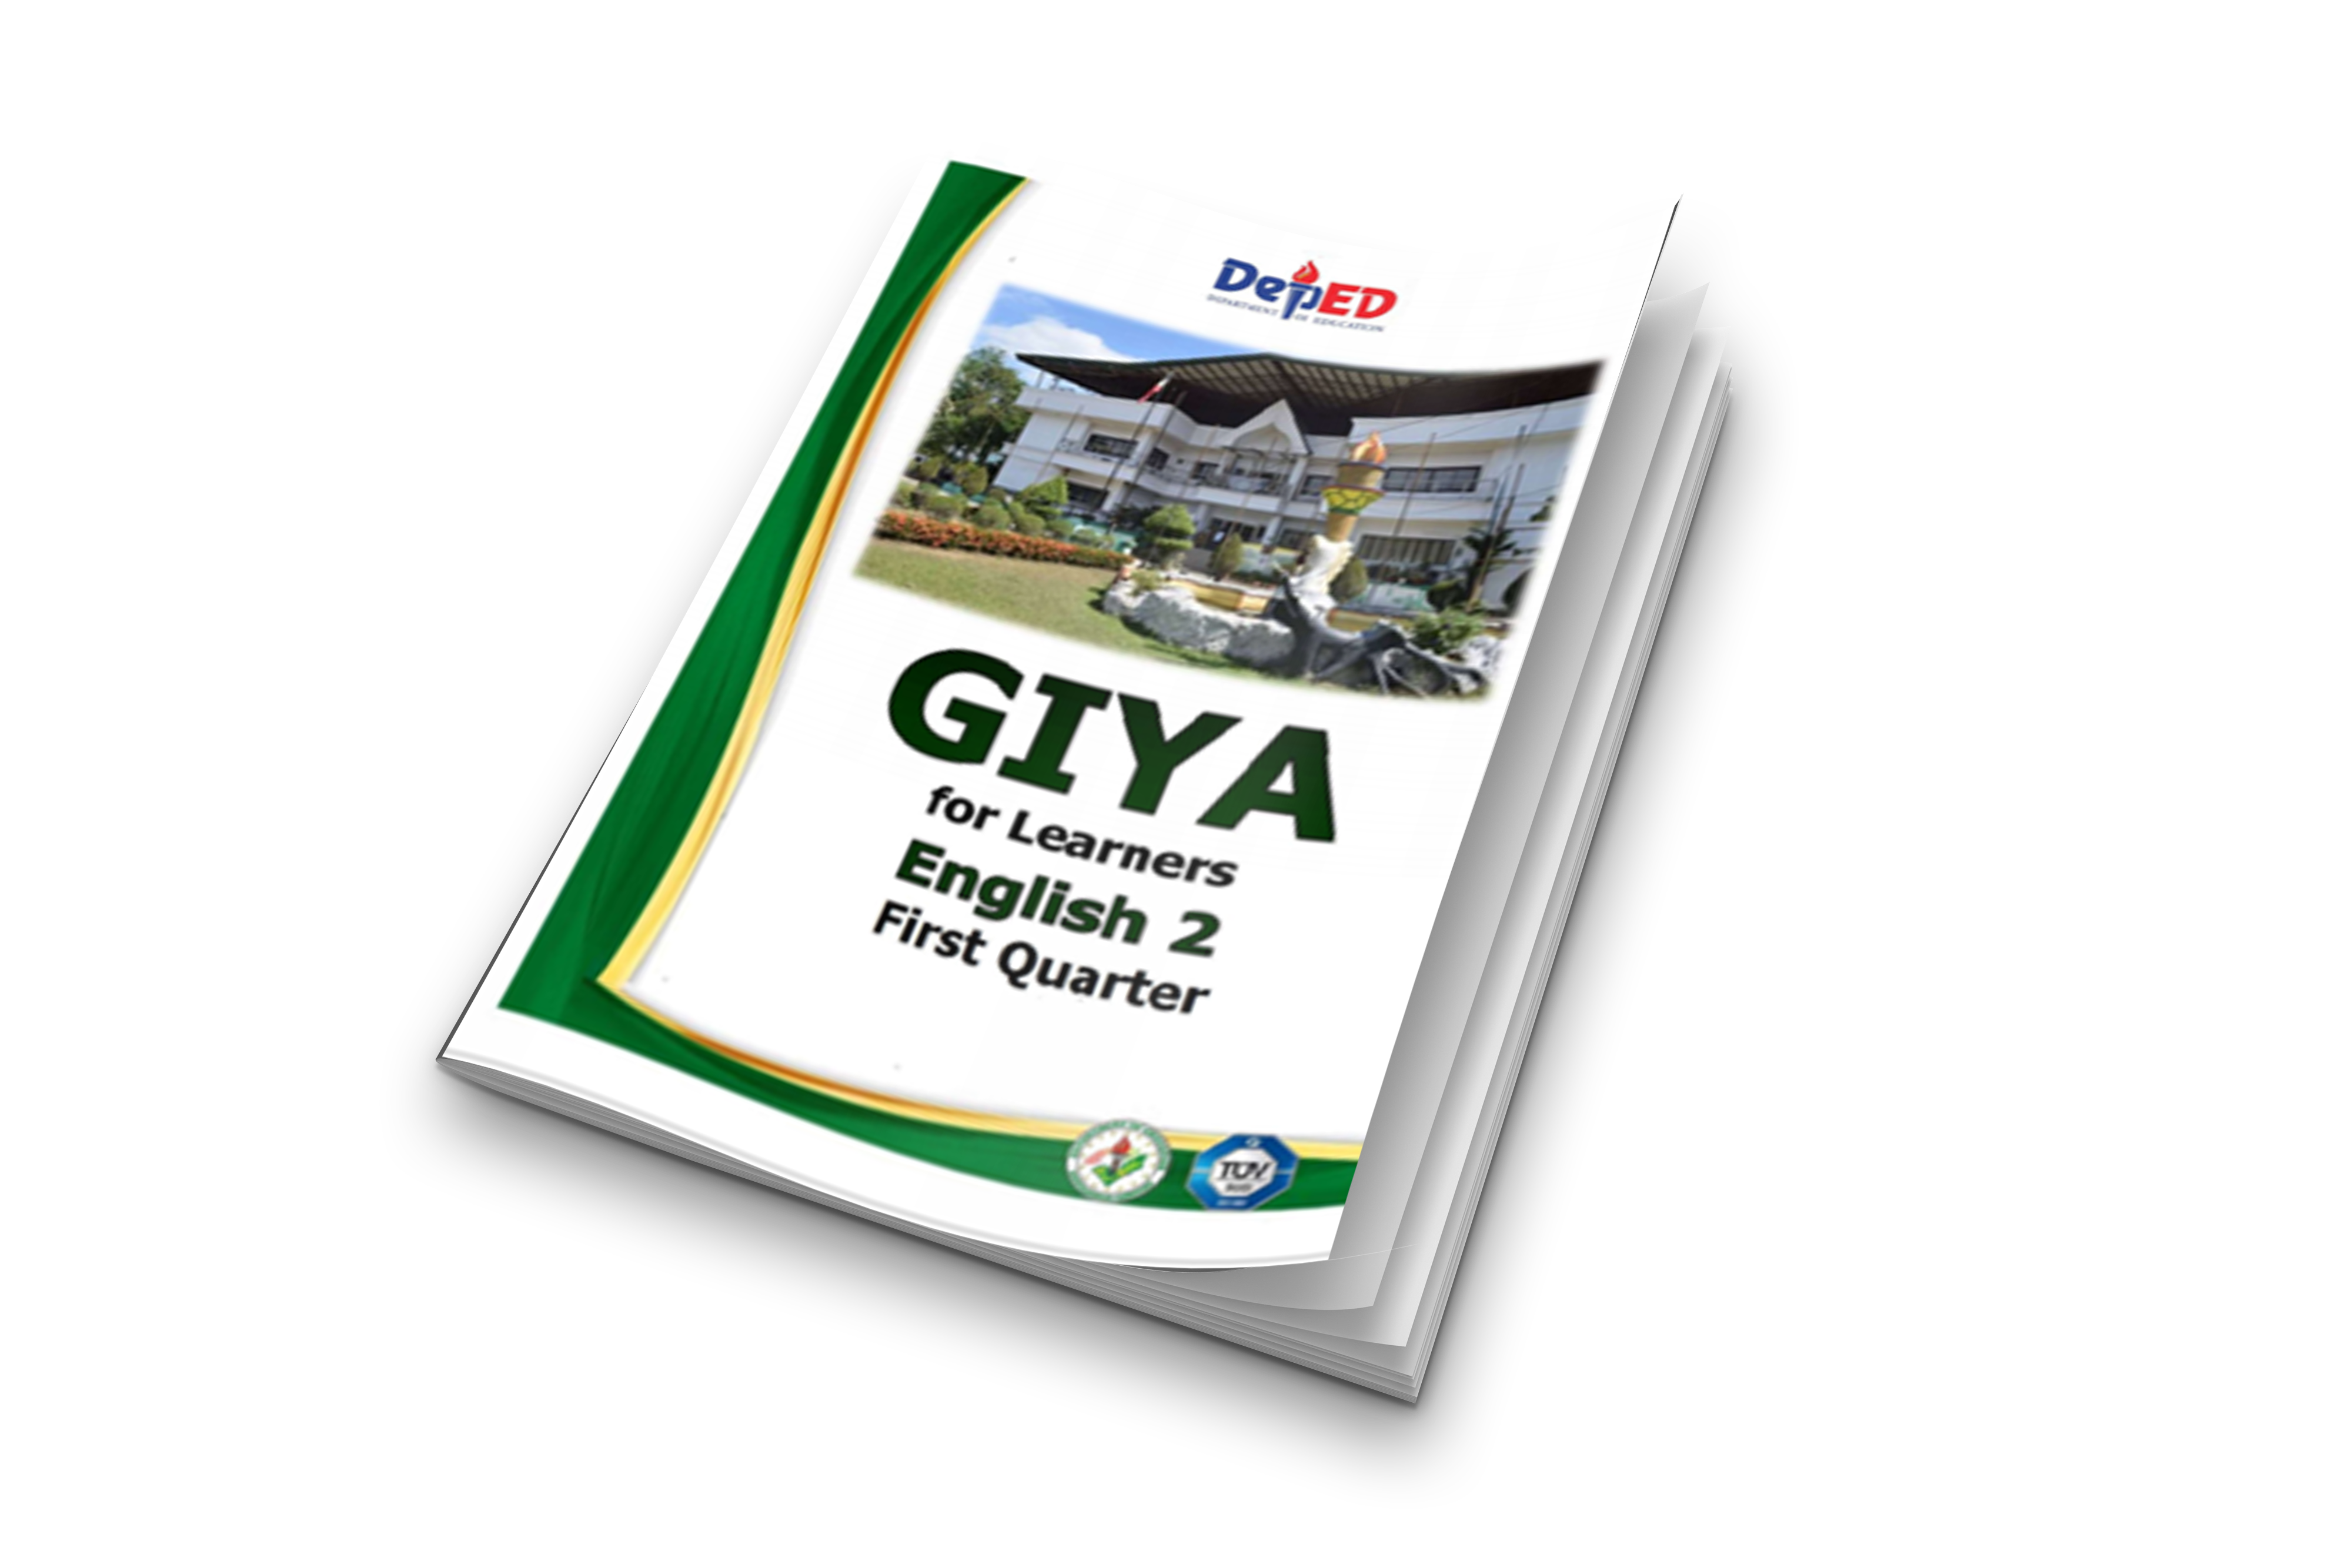 GIYA tests validity, major findings eyed